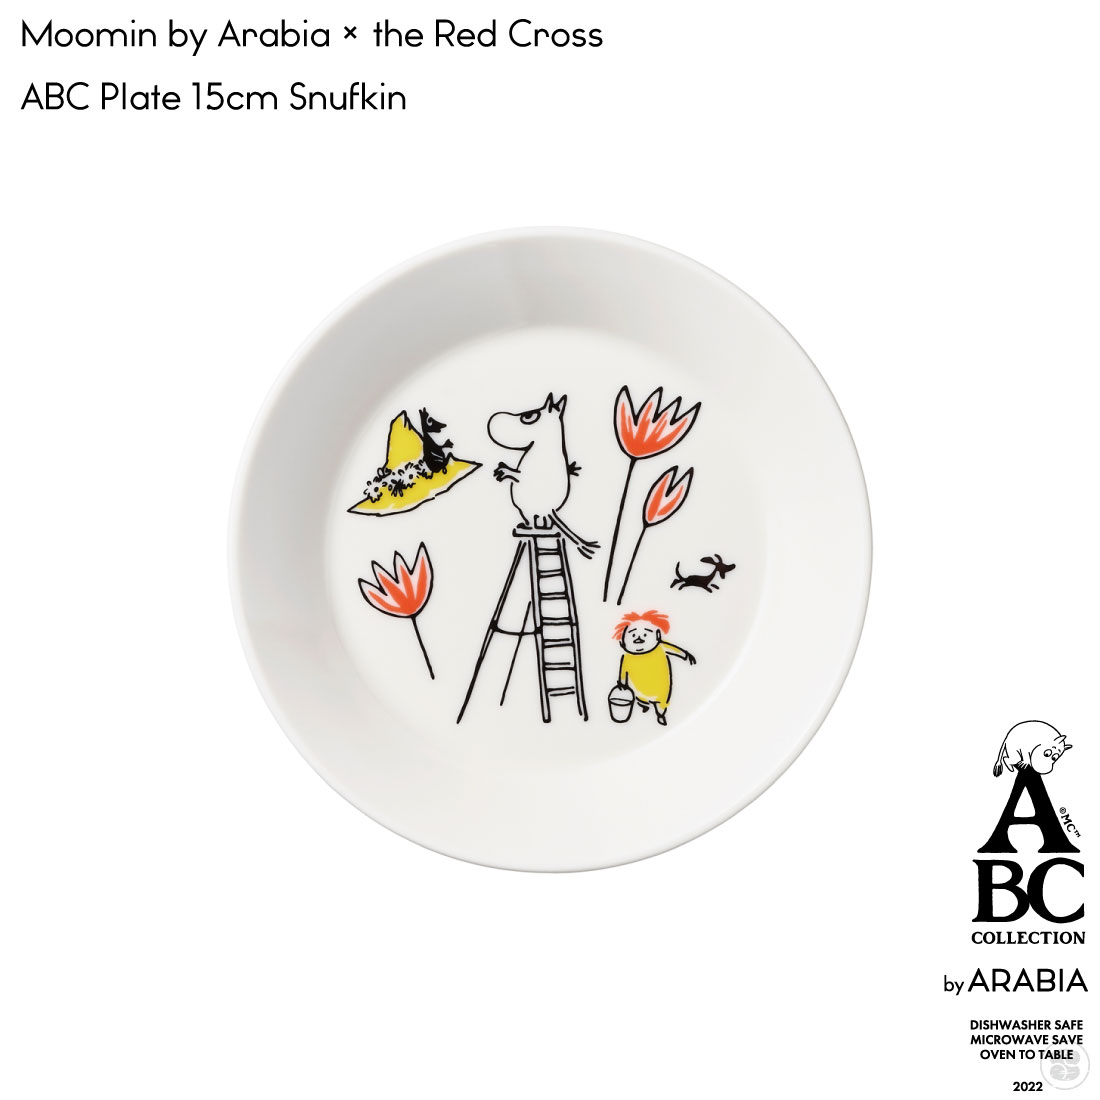 Moomin by Arabia × the Red Cross Plate 15cm ABC Snufkin Tove Slotte ムーミン アラビア 赤十字 プレート スナフキン トーベ スロッテ